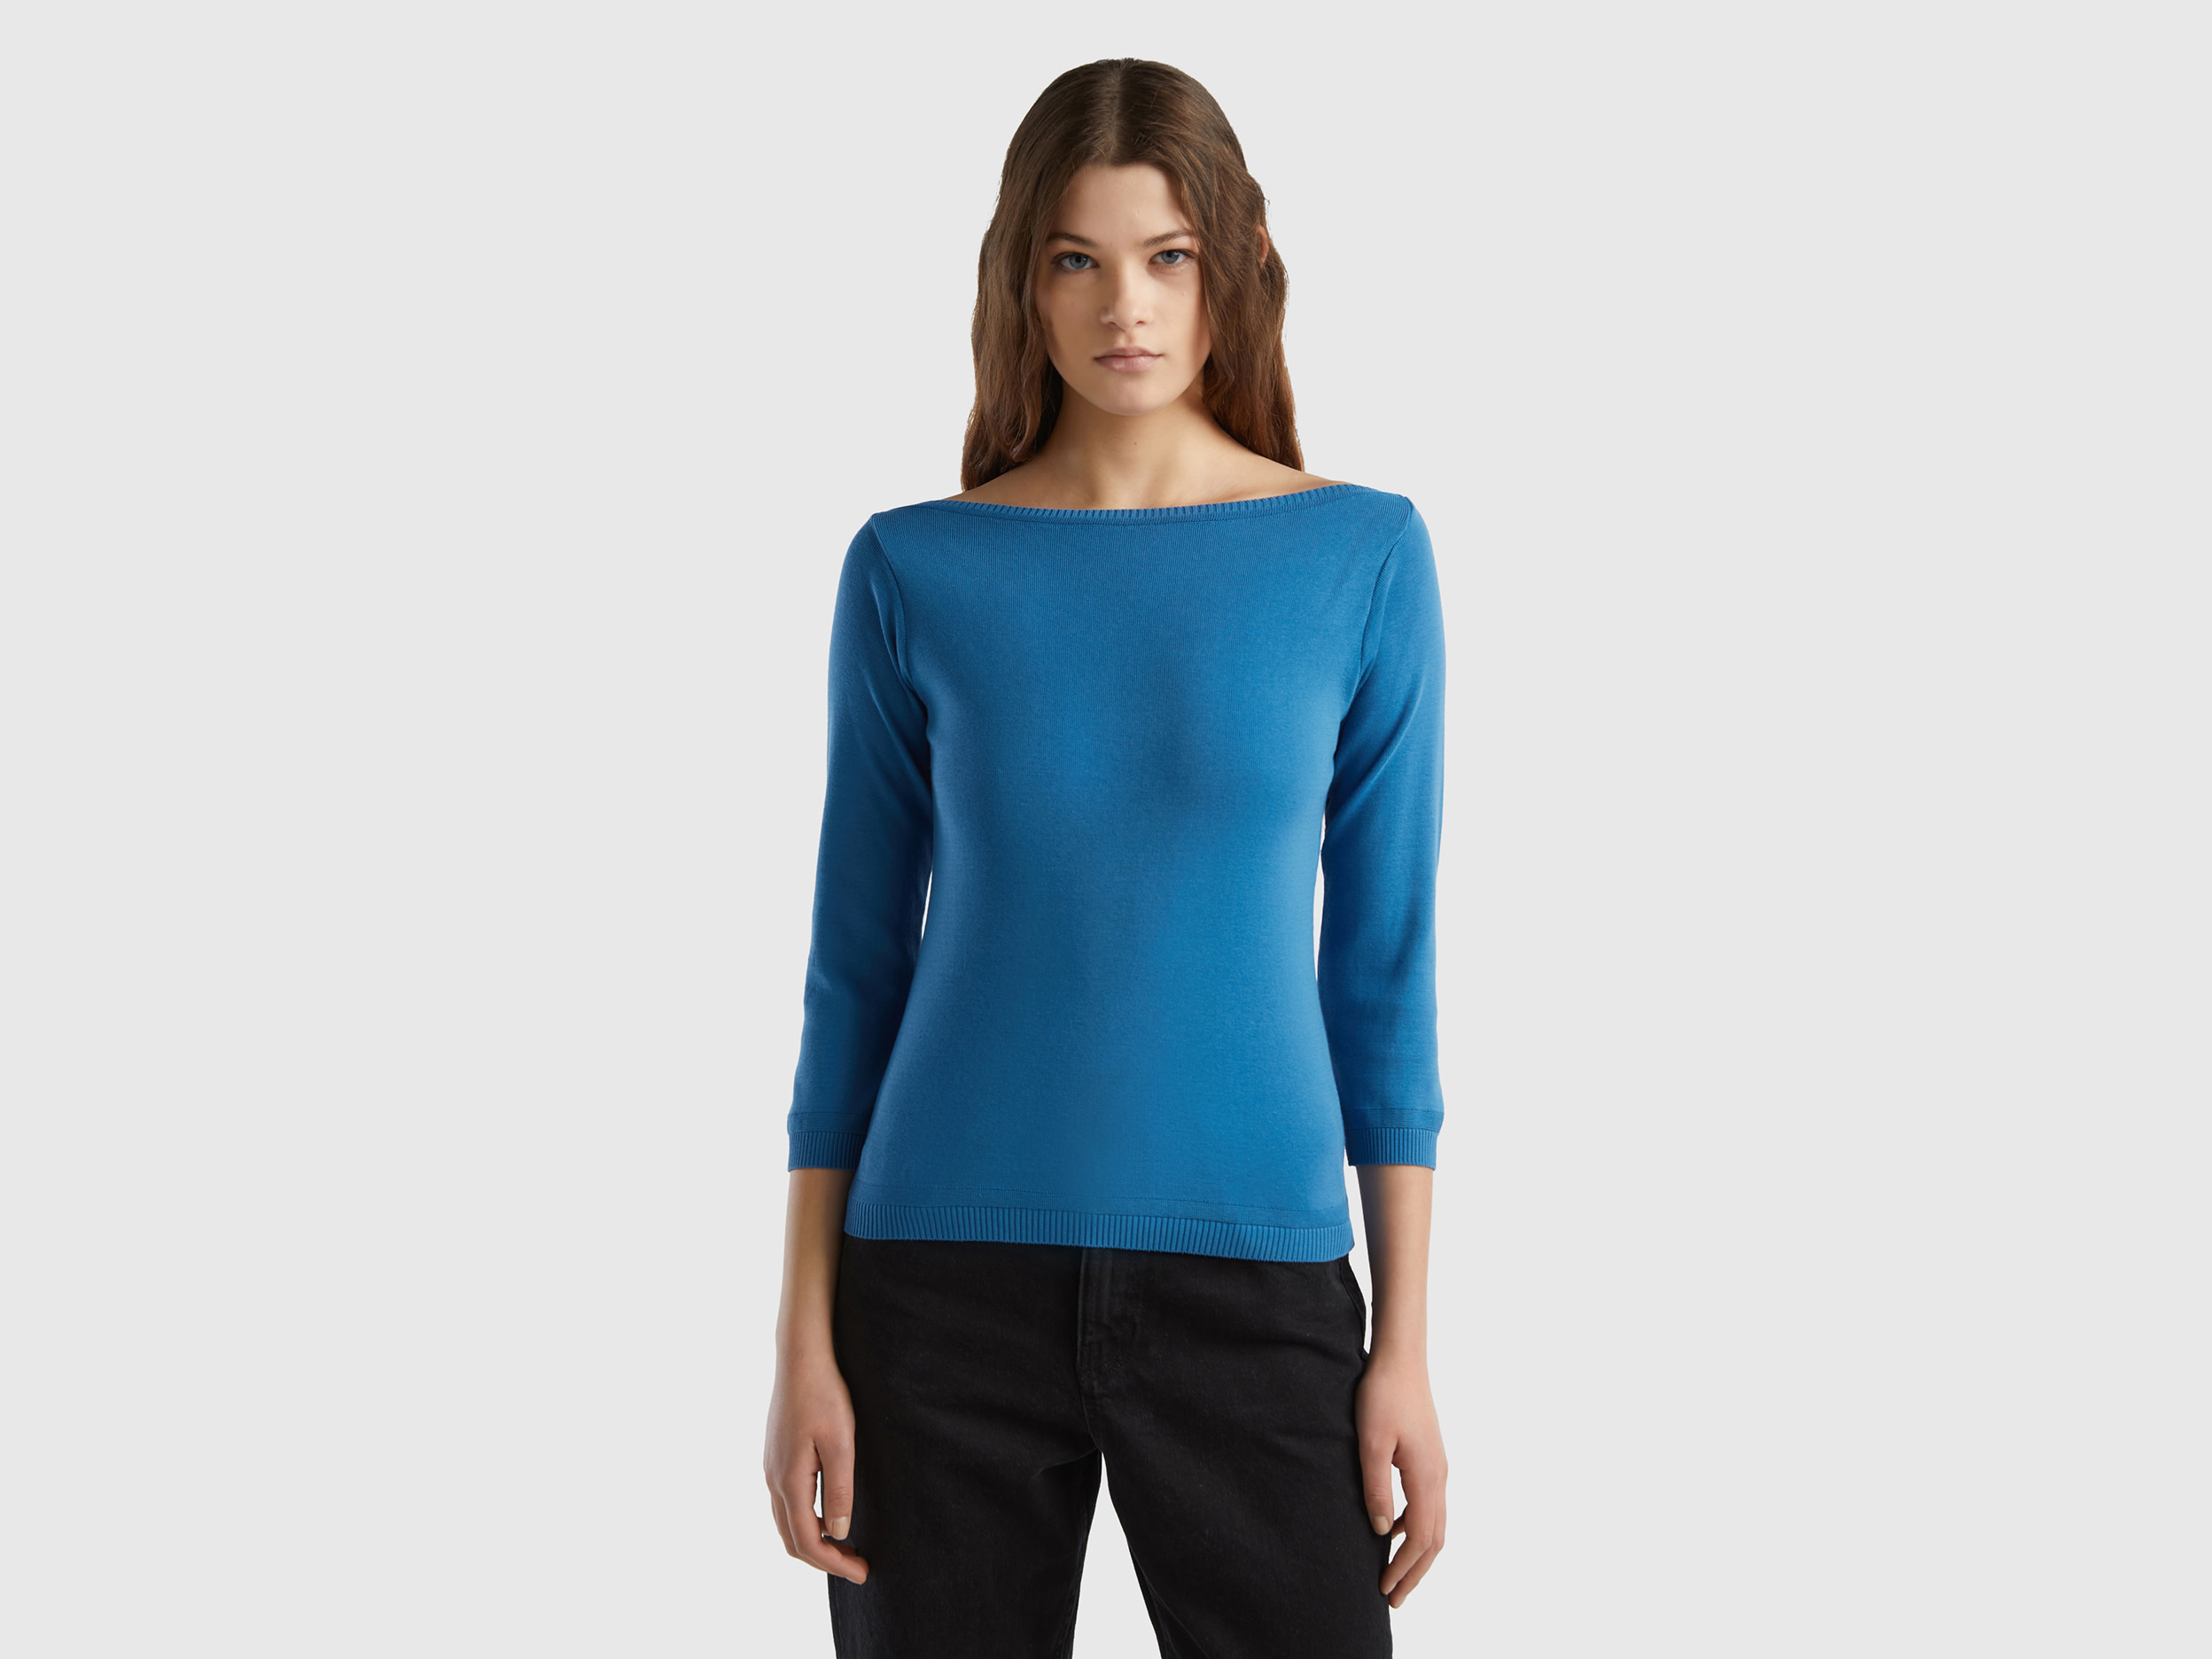 Benetton, 100% Cotton Boat Neck Sweater, size S, Blue, Women